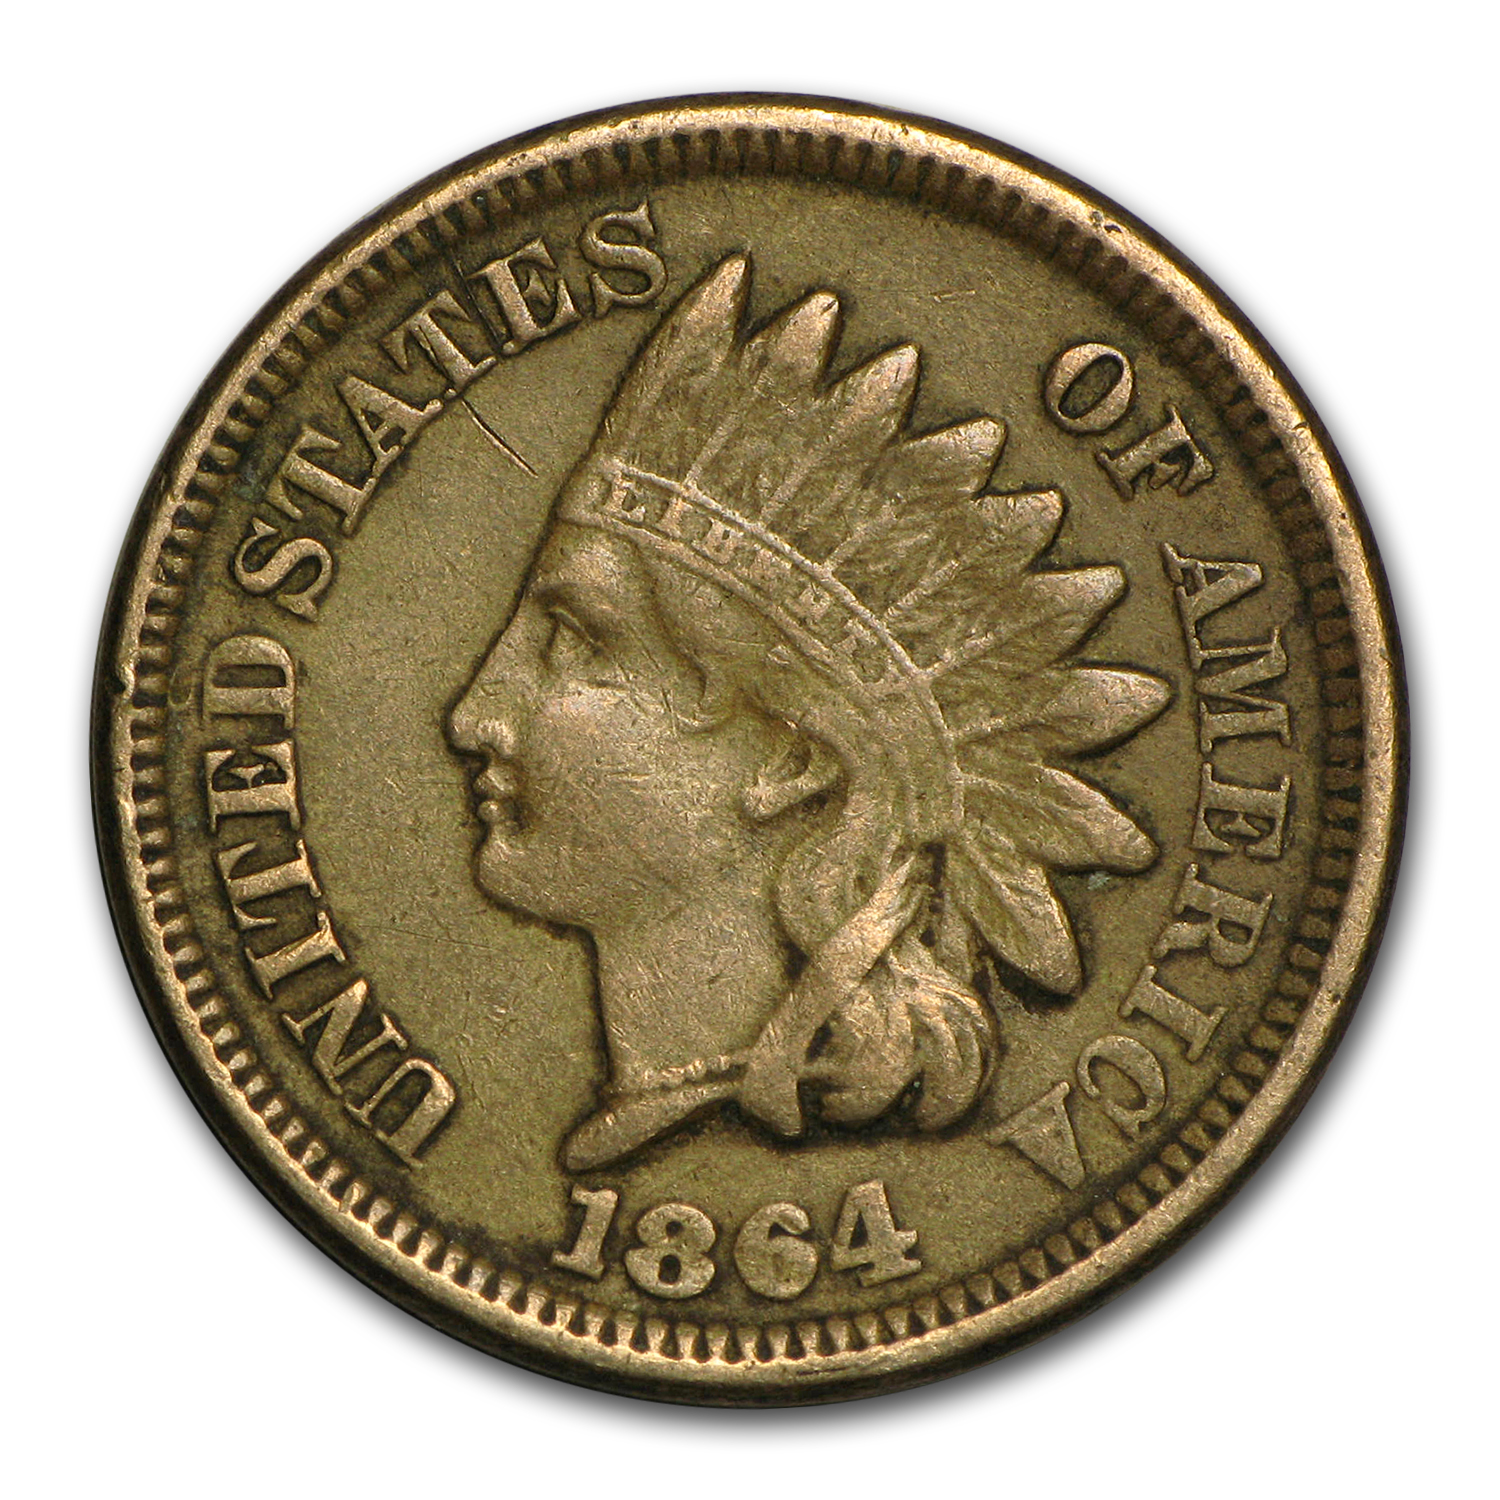 Buy 1864 Indian Head Cent Copper-Nickel VF